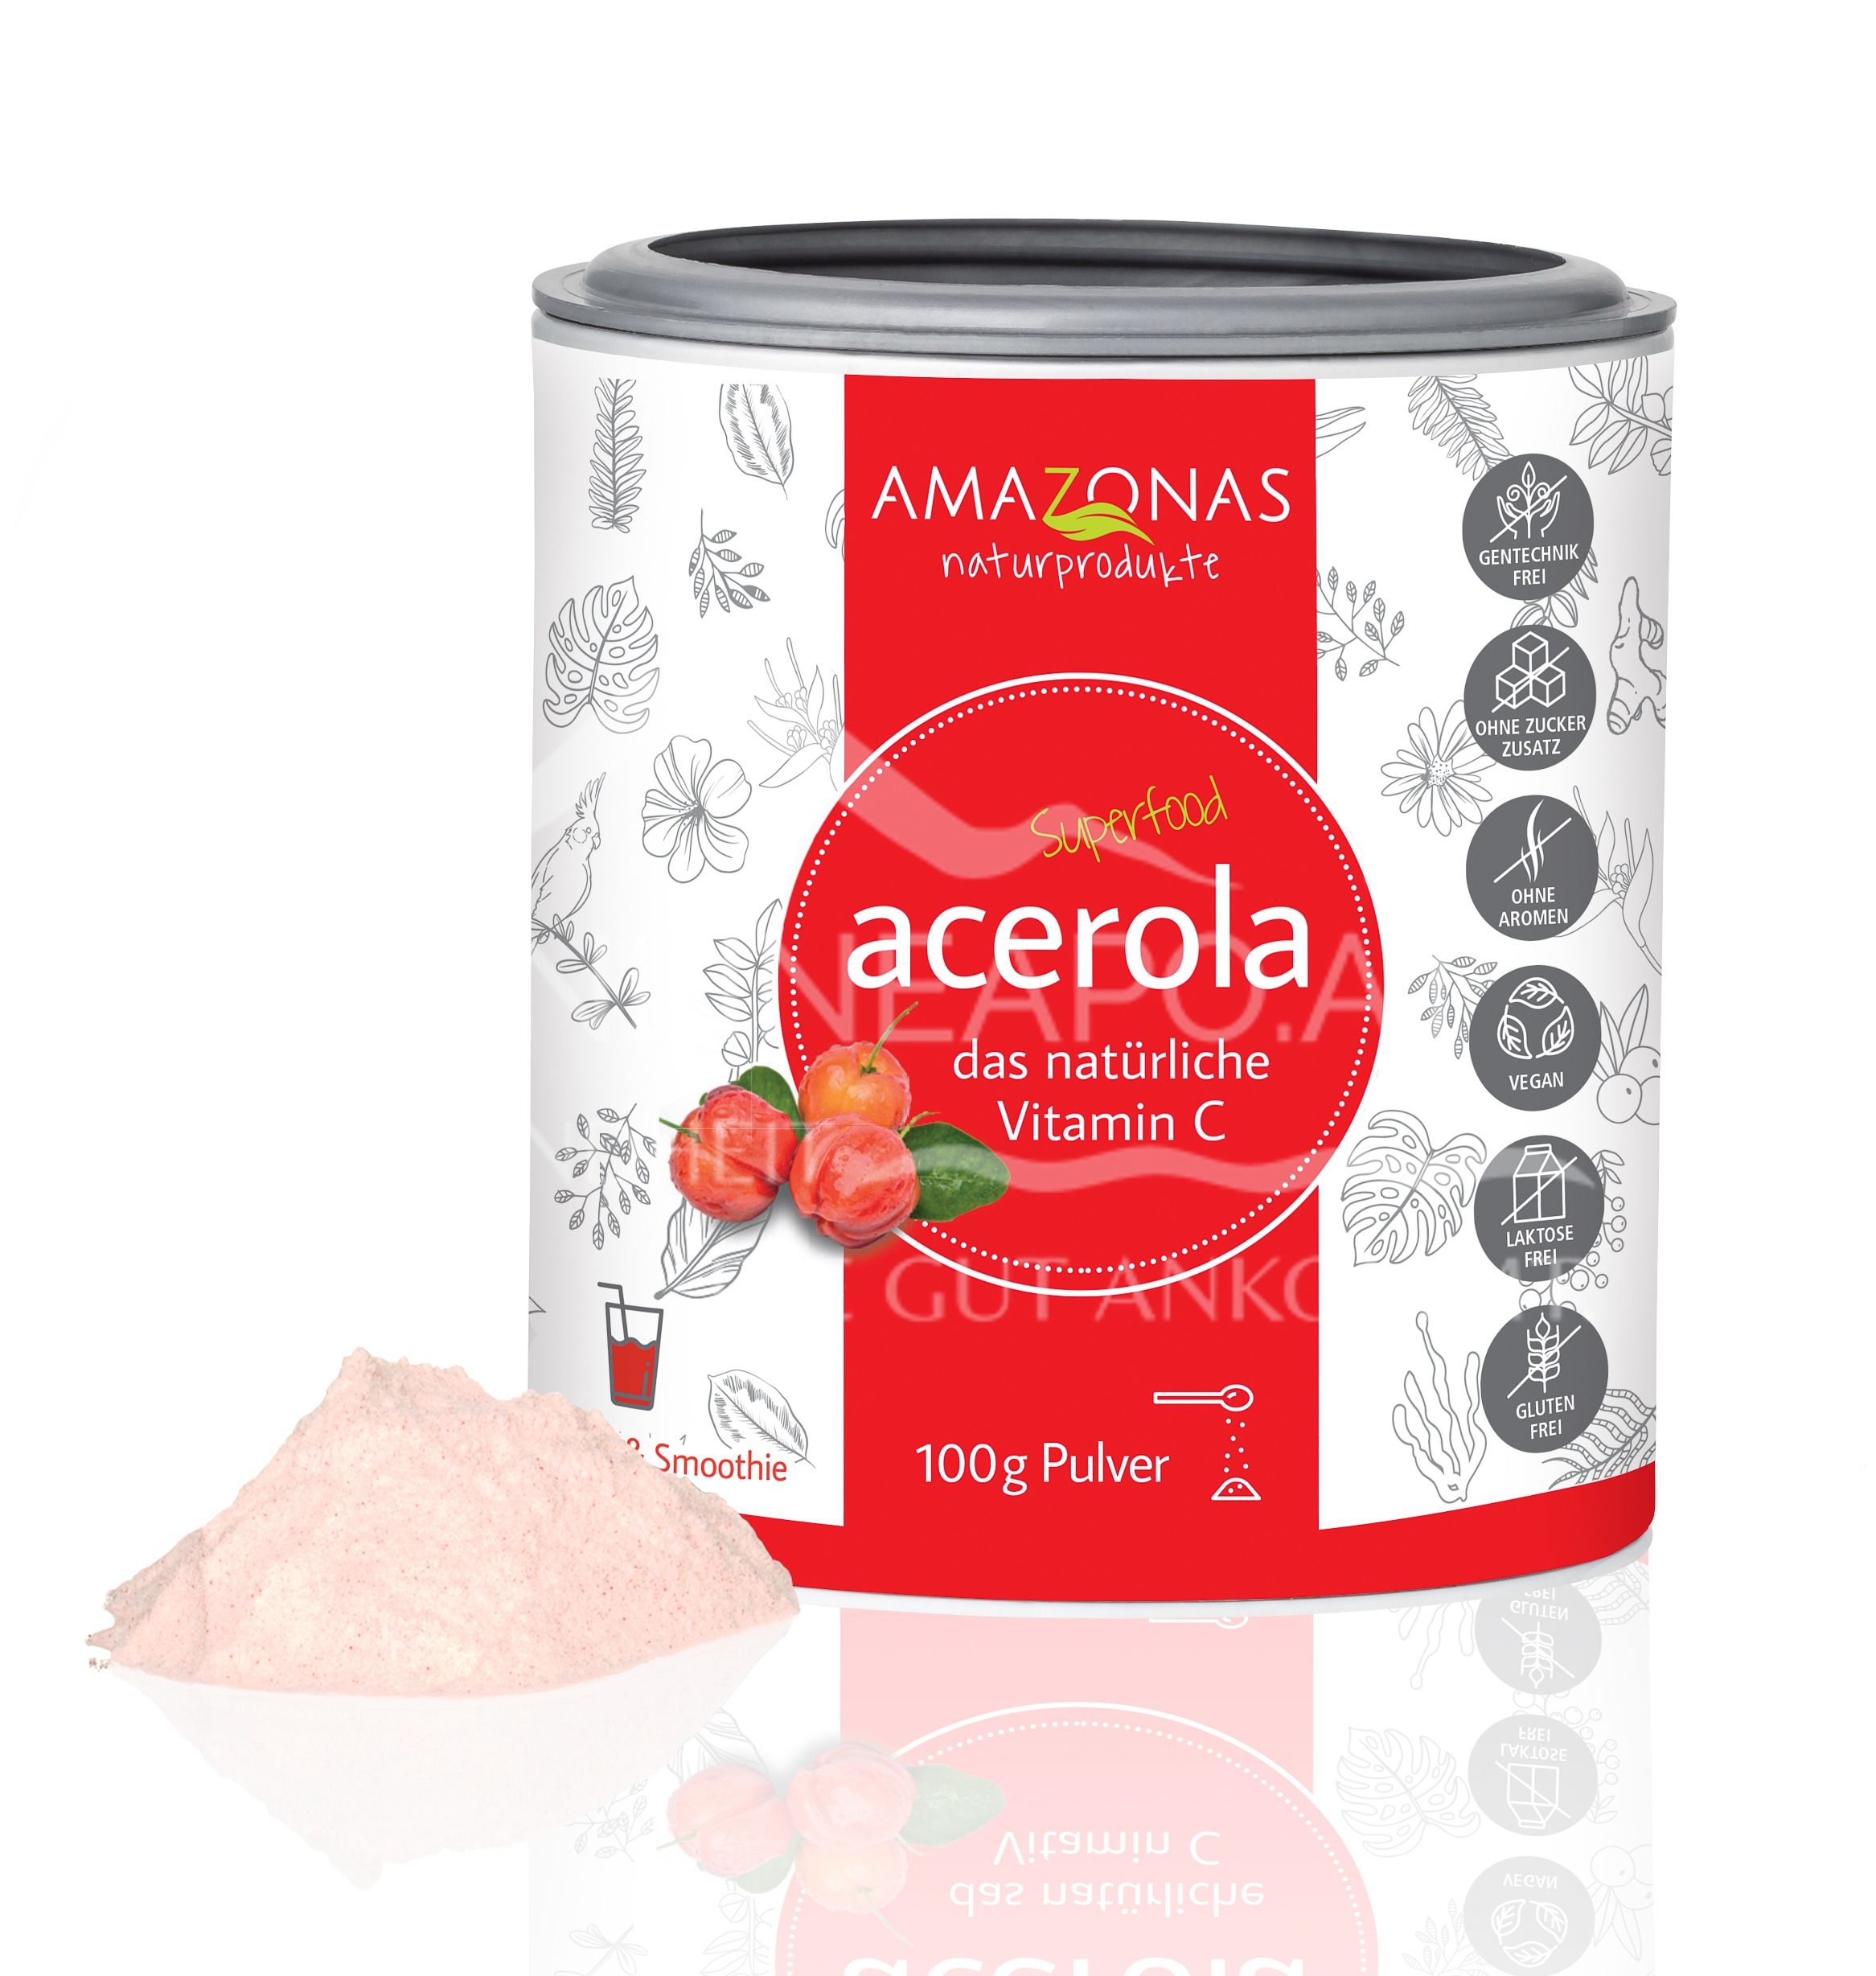 AMAZONAS Acerola Vitamin C Fruchtpulver, mit 17% Vitamin C